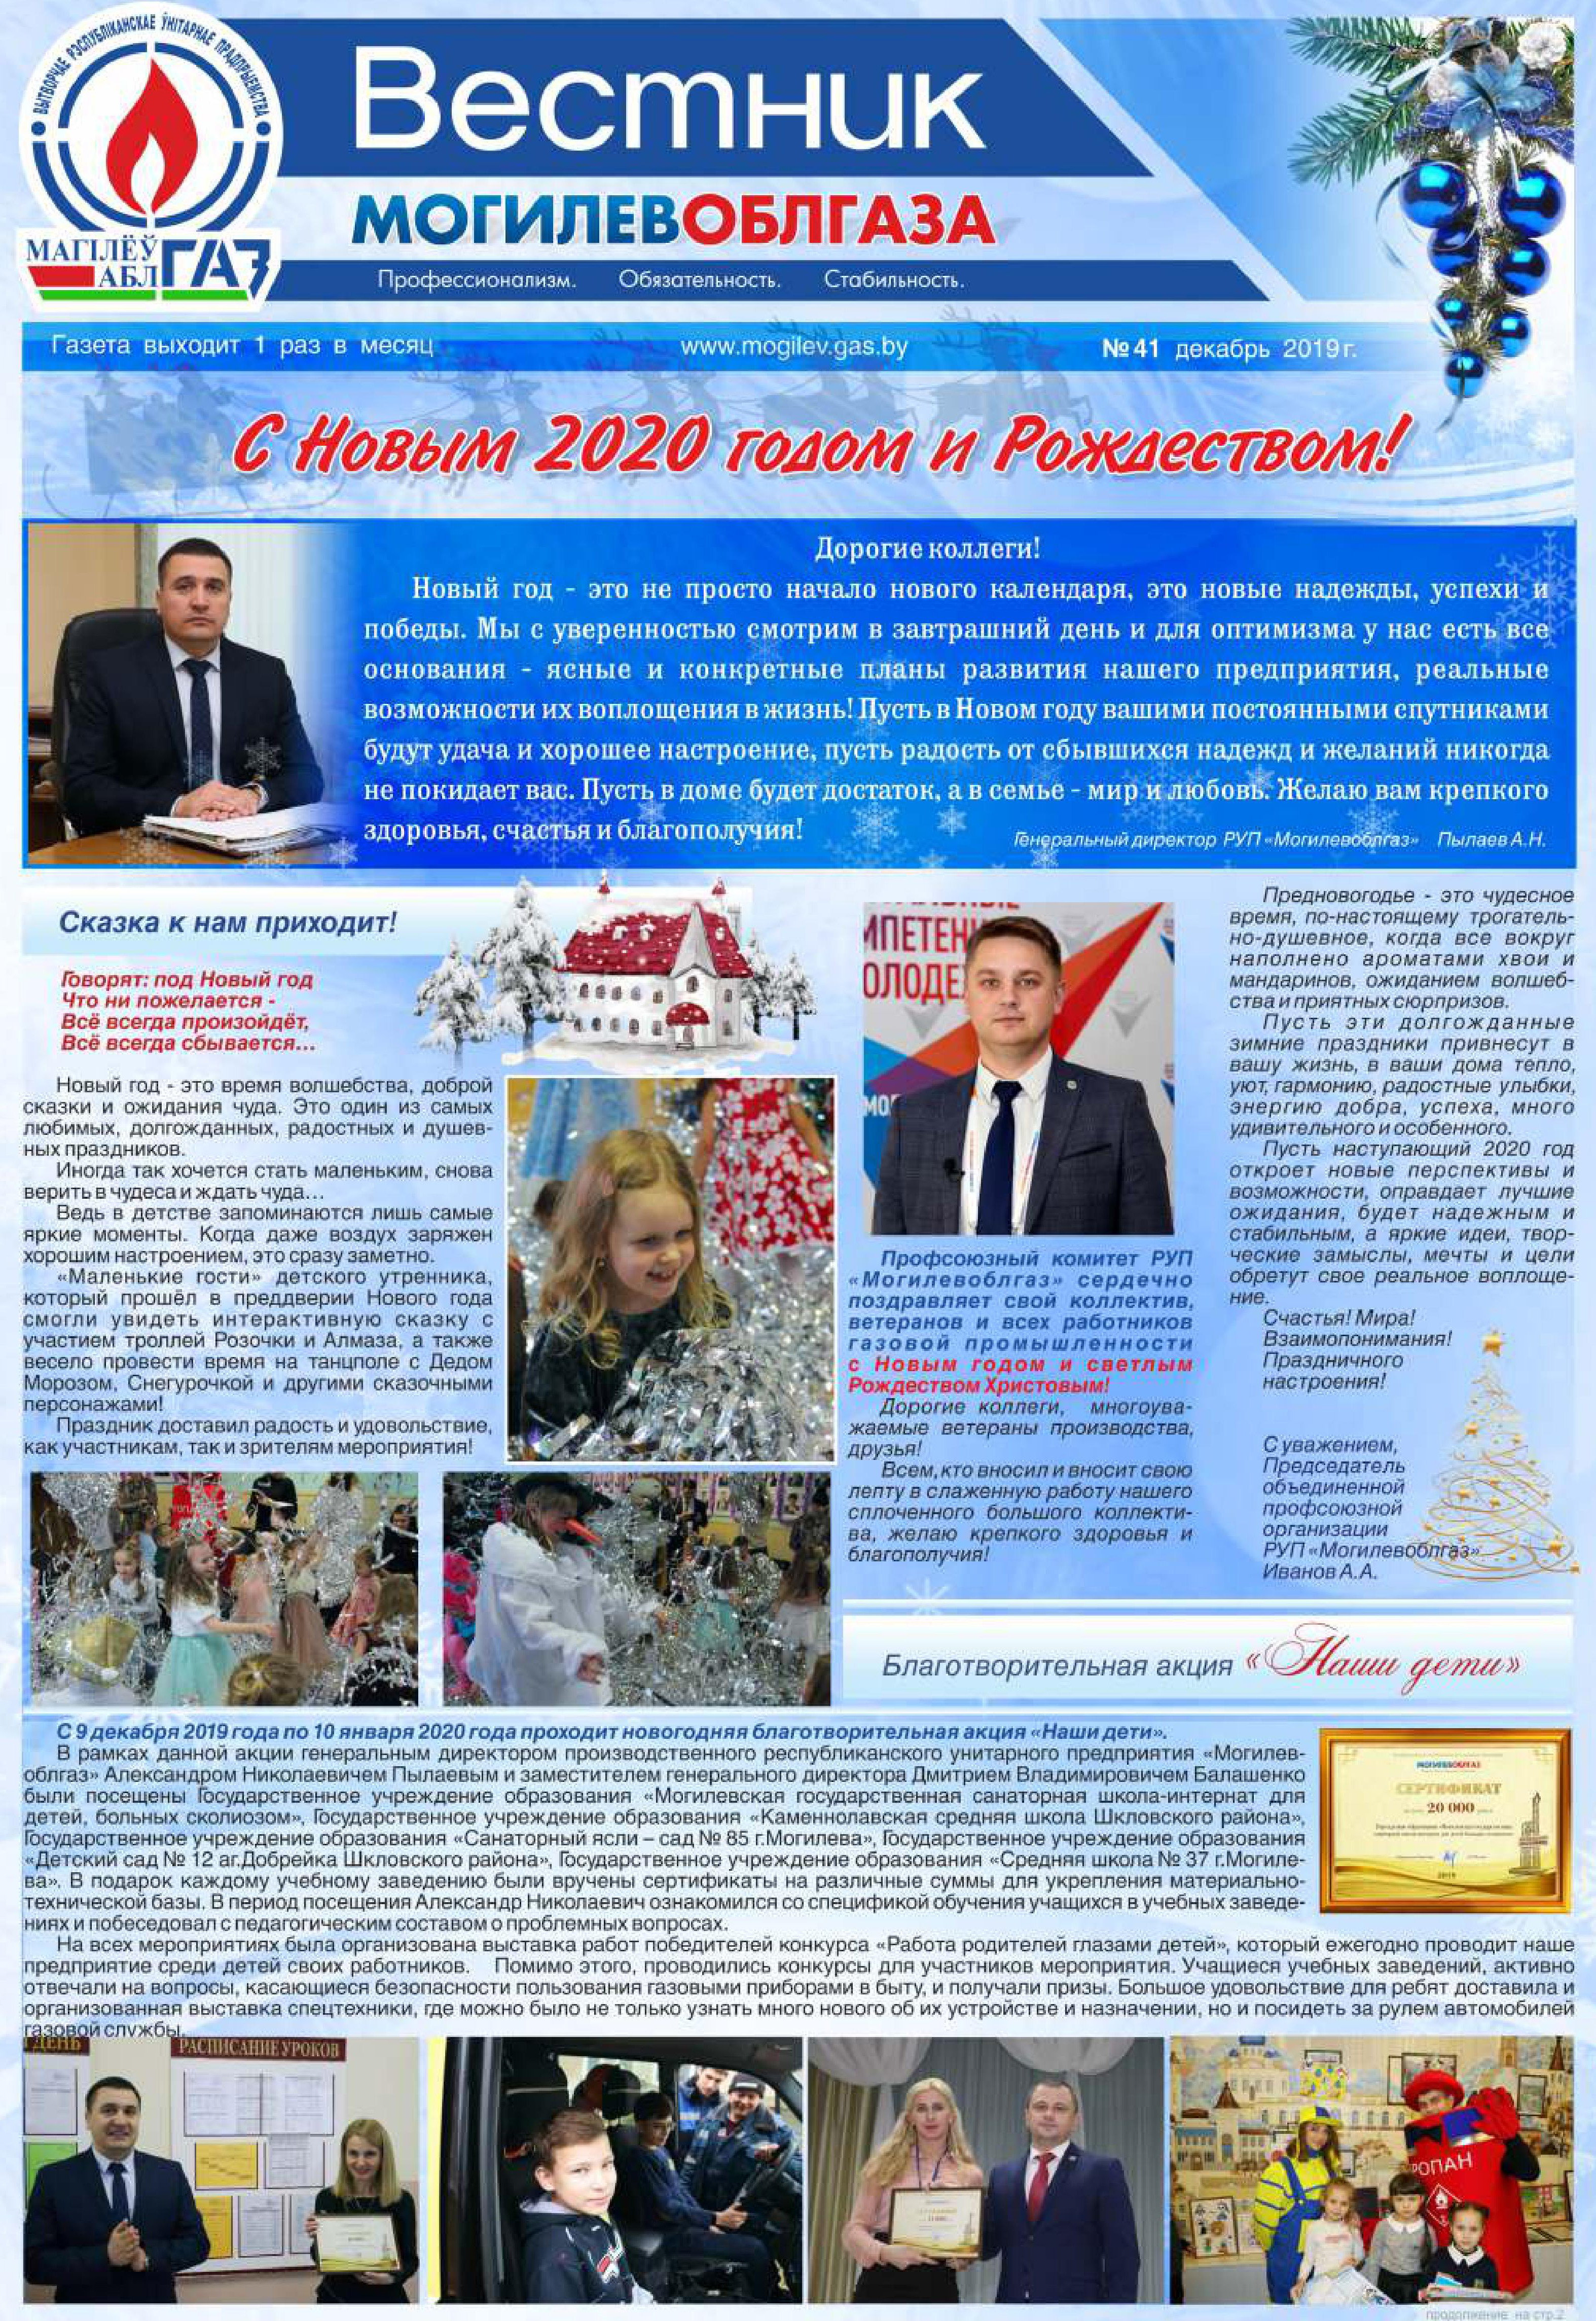 Вестник Могилевоблгаза №41